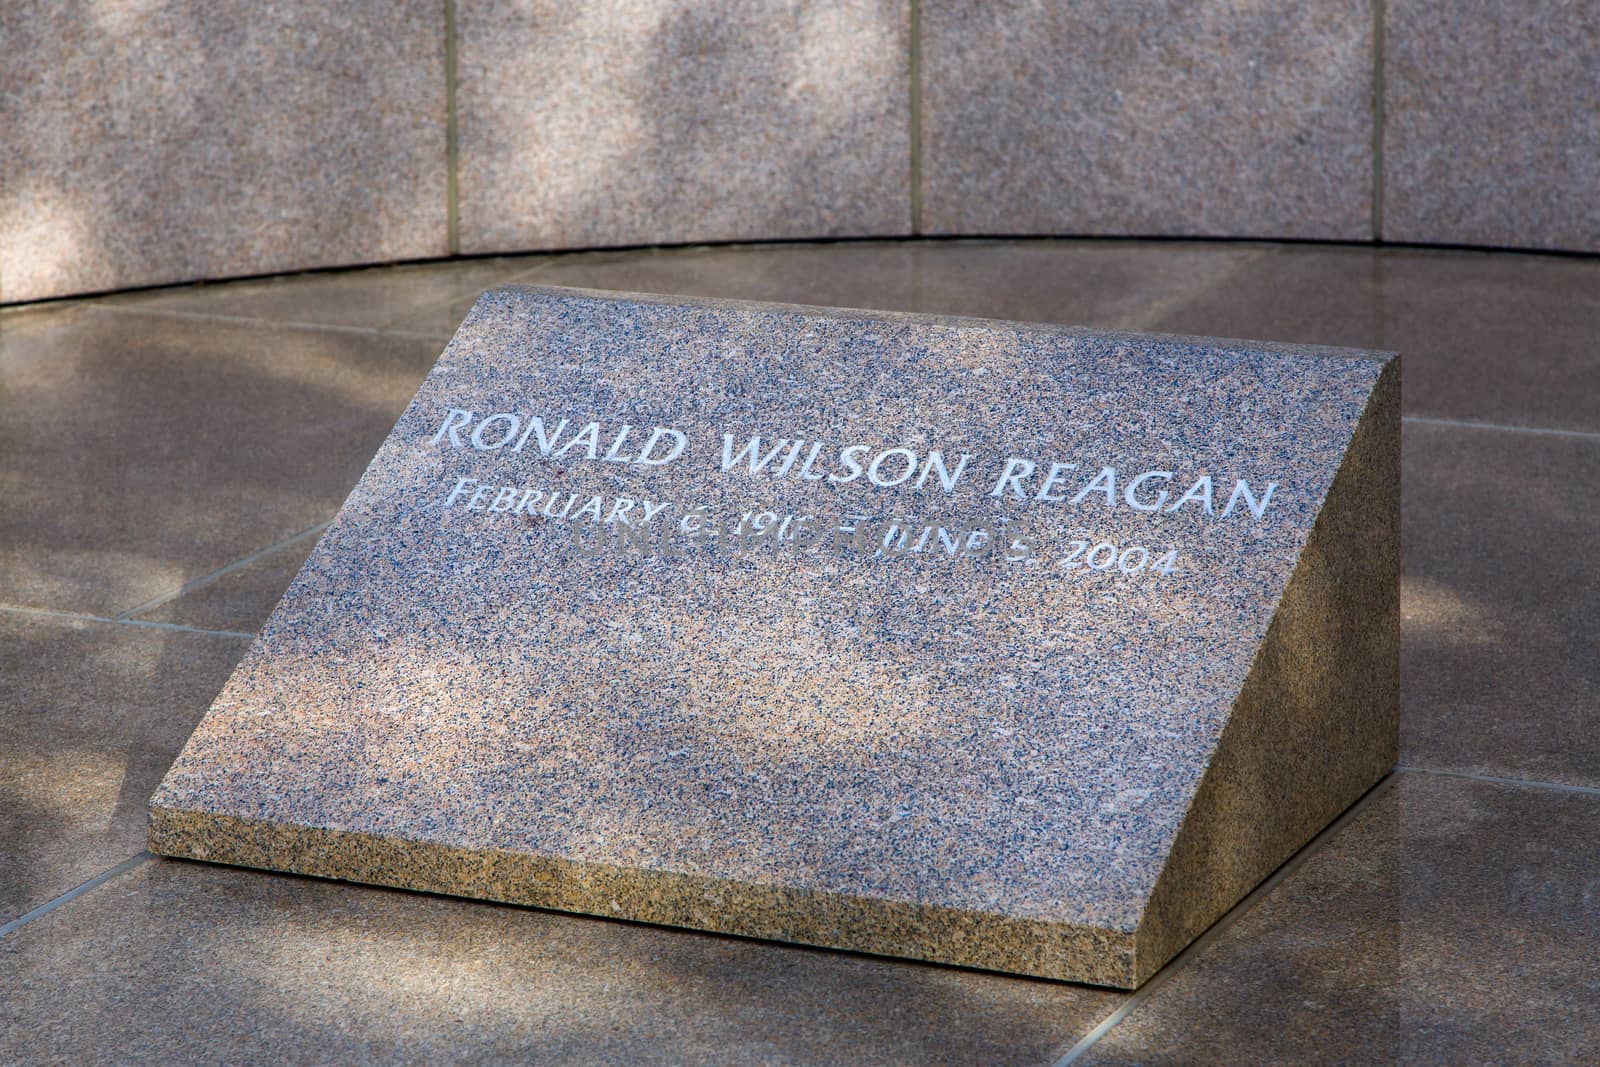 Ronald Reagan Headstone at Reagan Library by wolterk